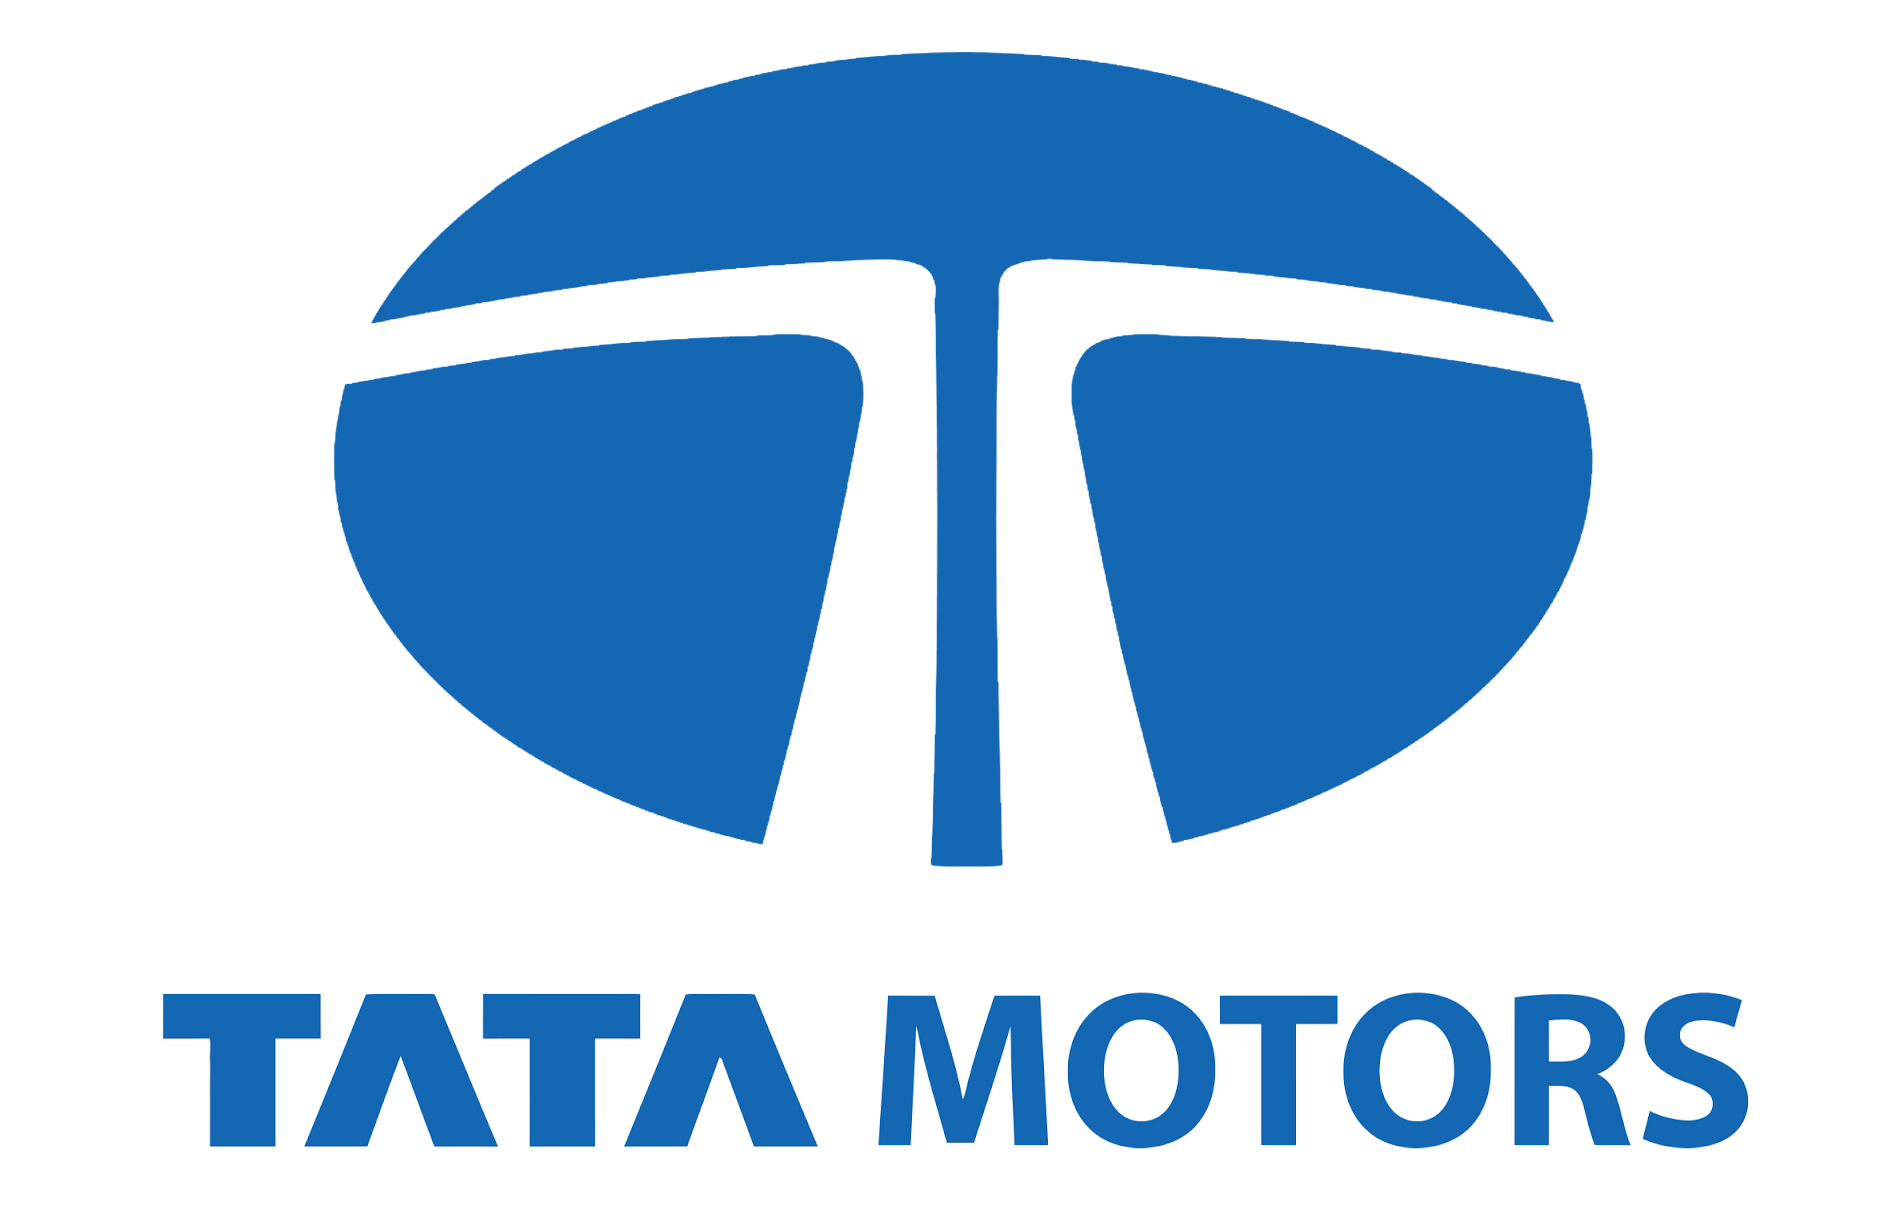 Tata Motors Cars Showroom - KVR Dream Vehicles Pvt Ltd|Show Room|Automotive